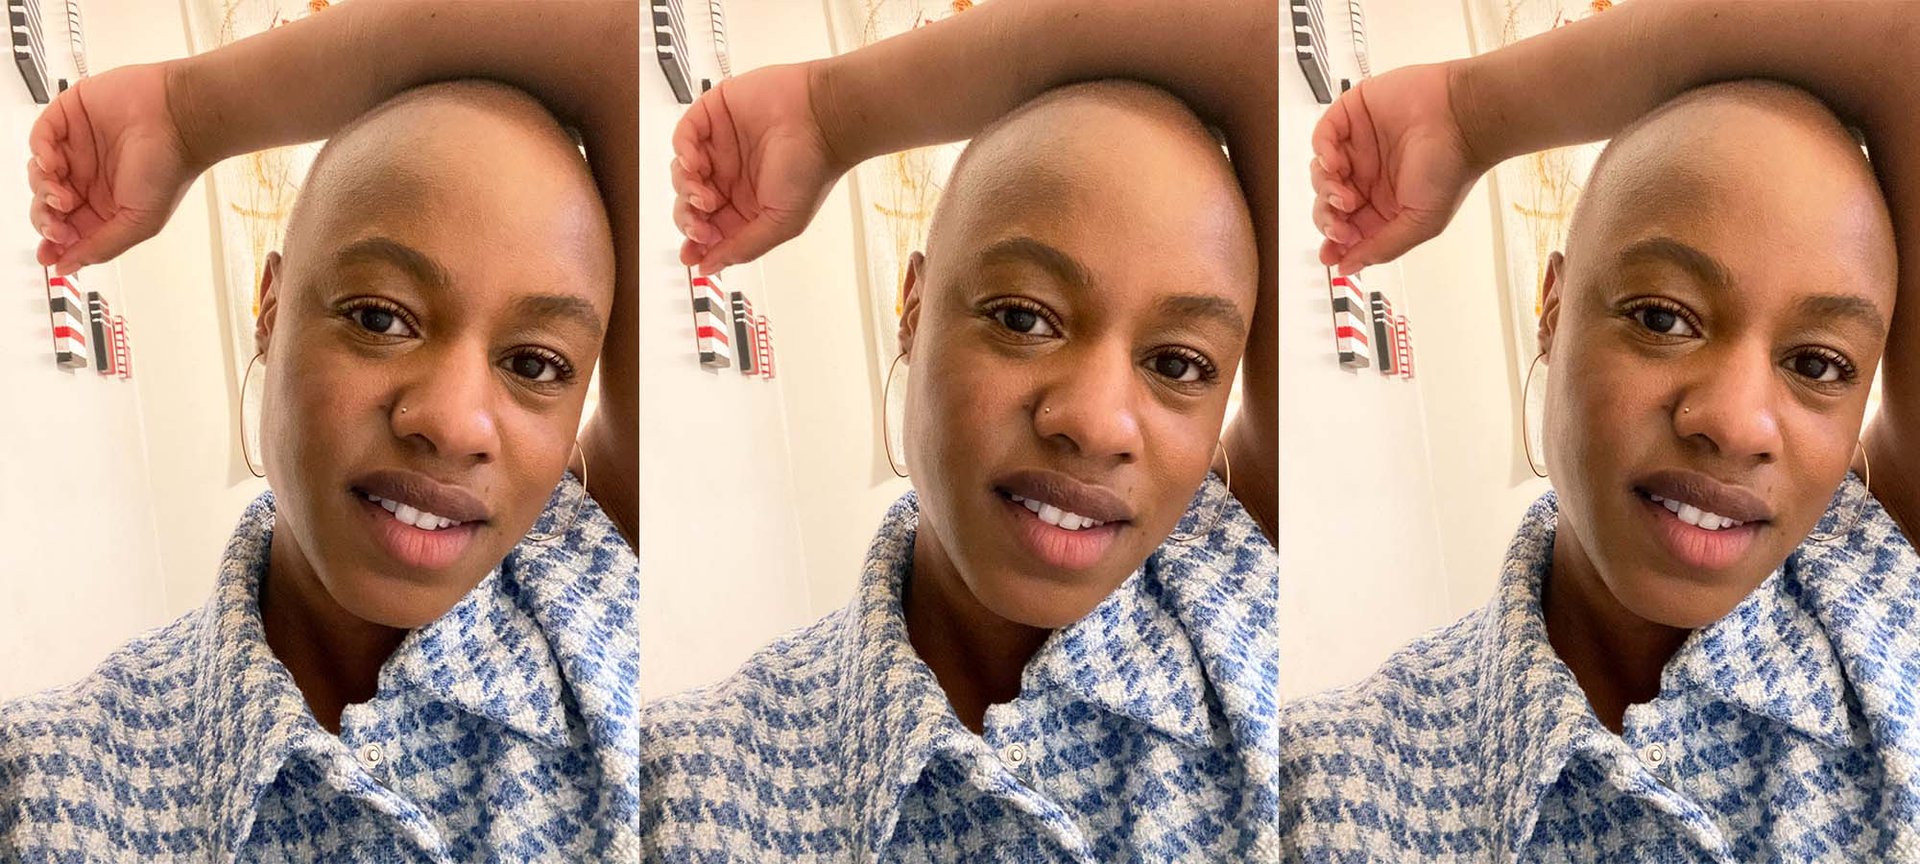 5 Ways To Care For A Bald Head During Winter - L'Oréal Paris